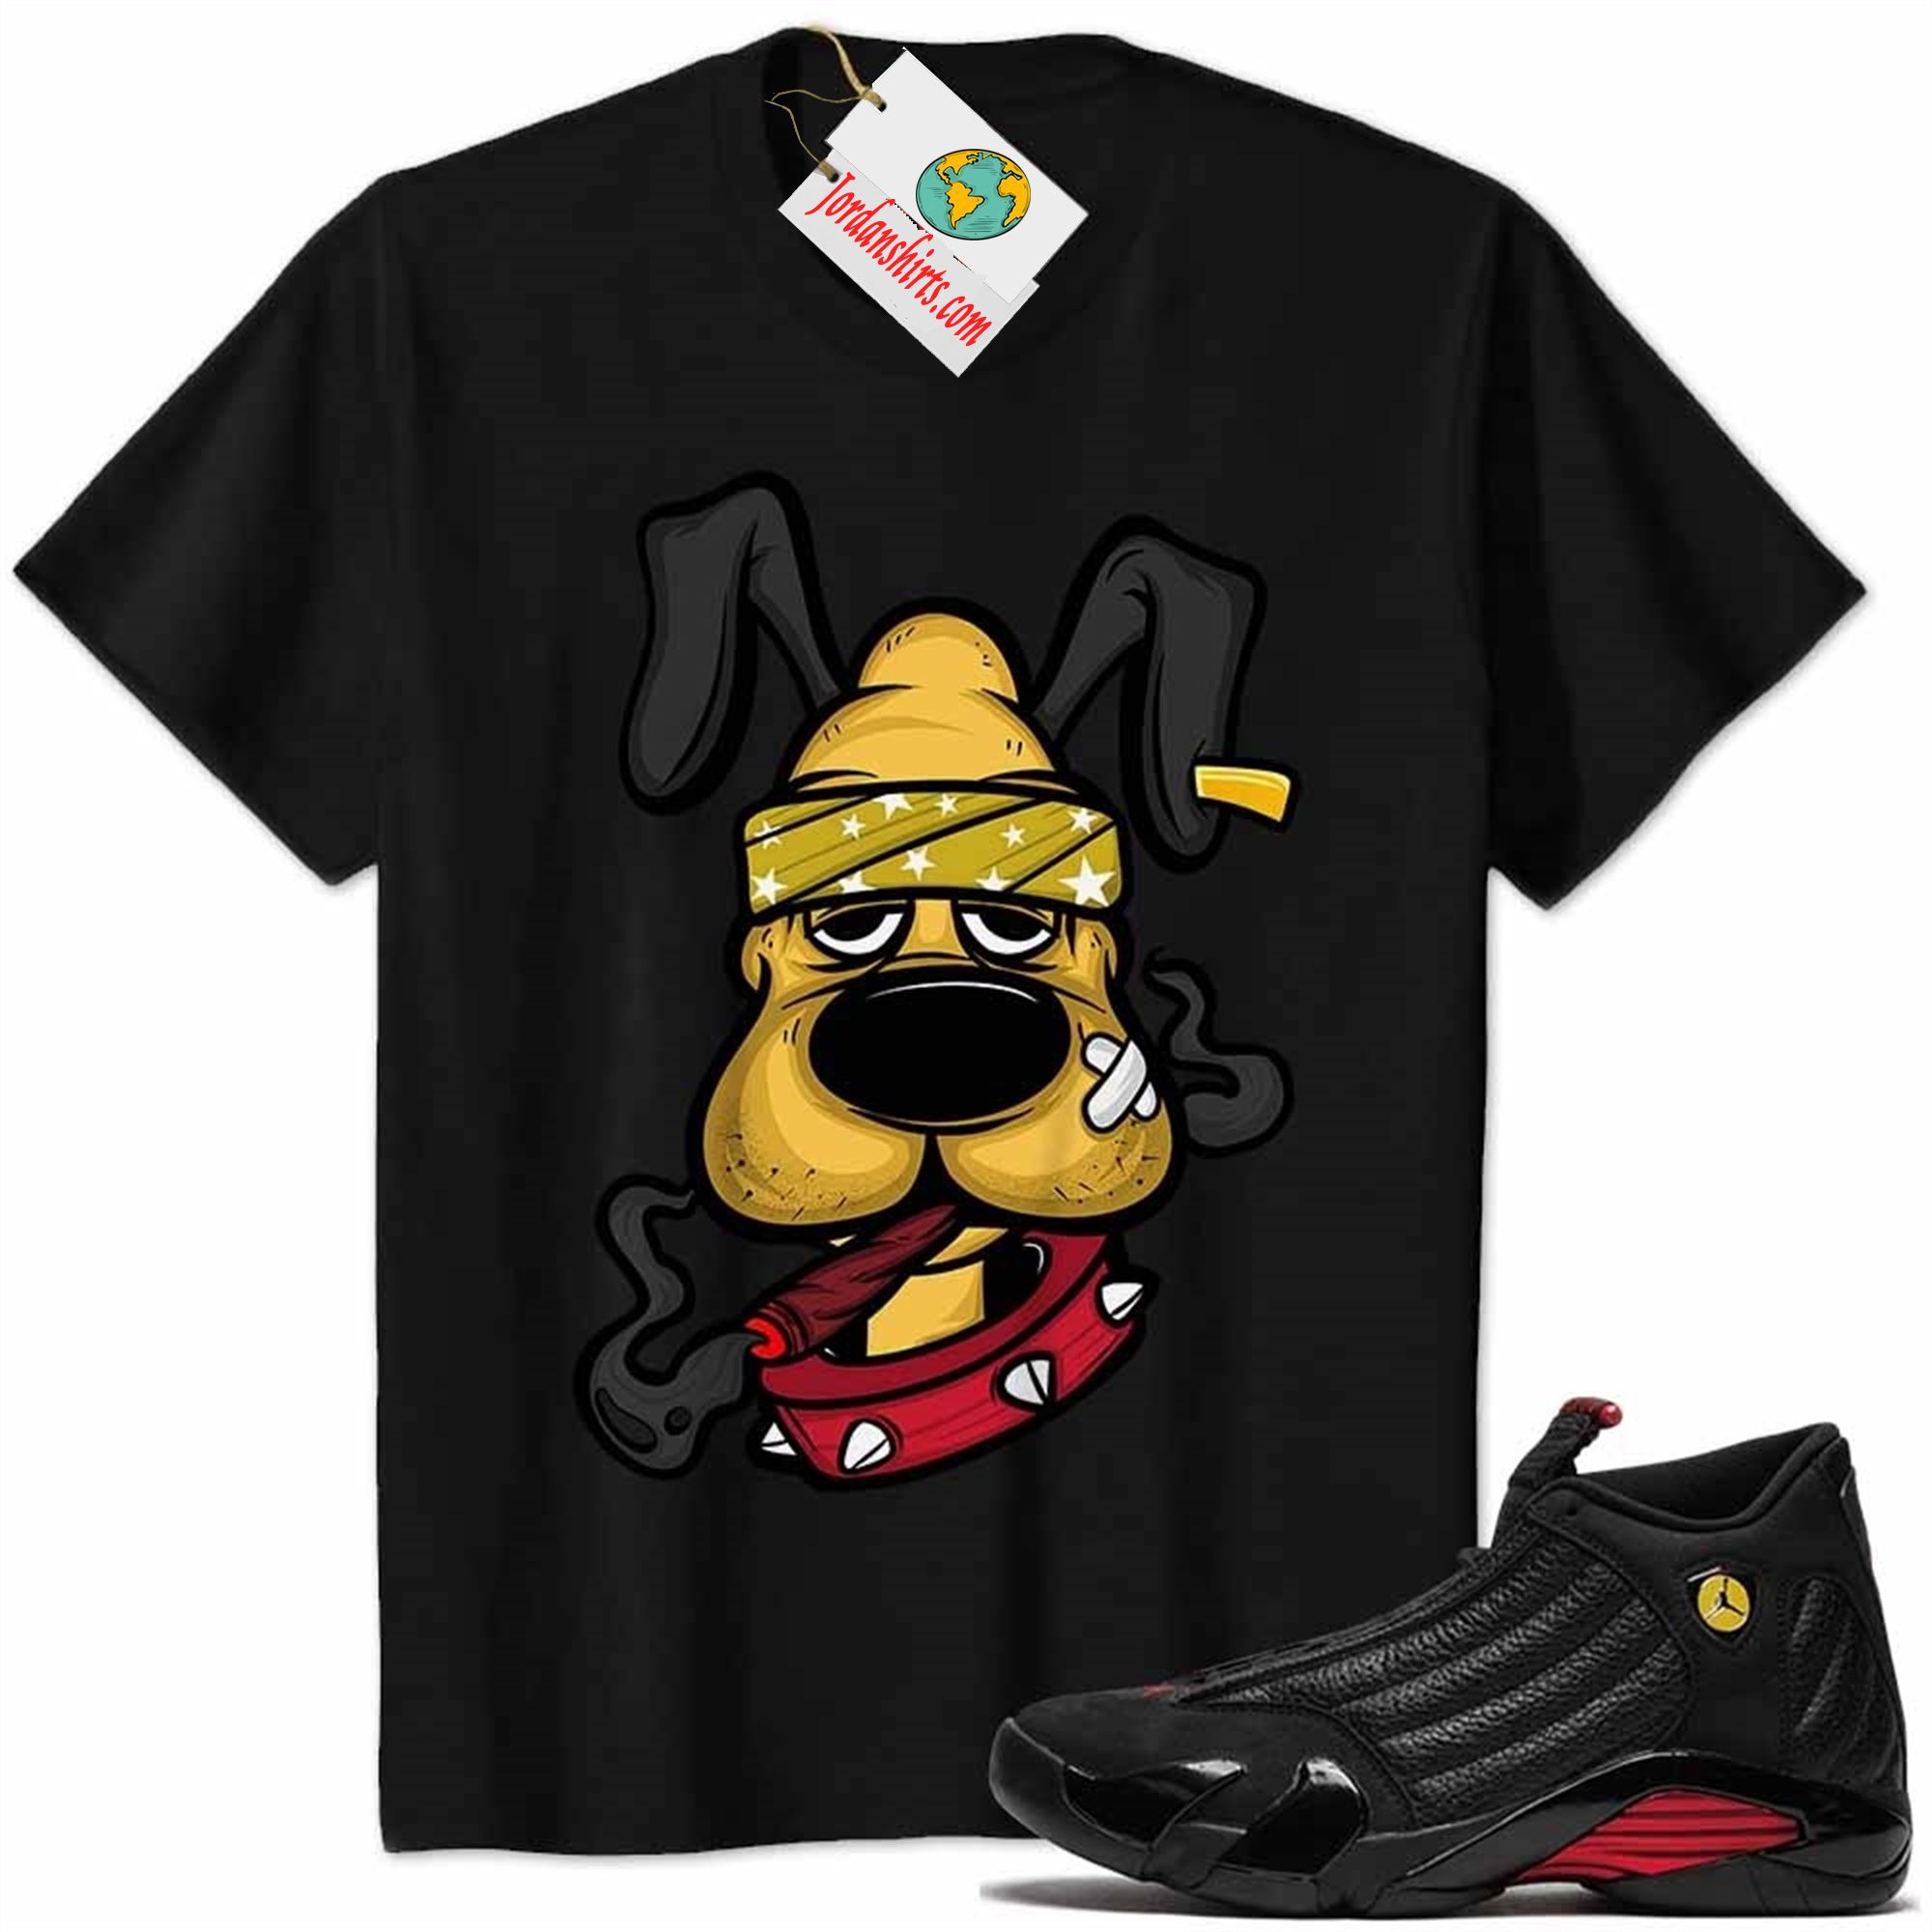 Jordan 14 Shirt, Gangster Pluto Smoke Weed Black Air Jordan 14 Last Shot 14s Size Up To 5xl